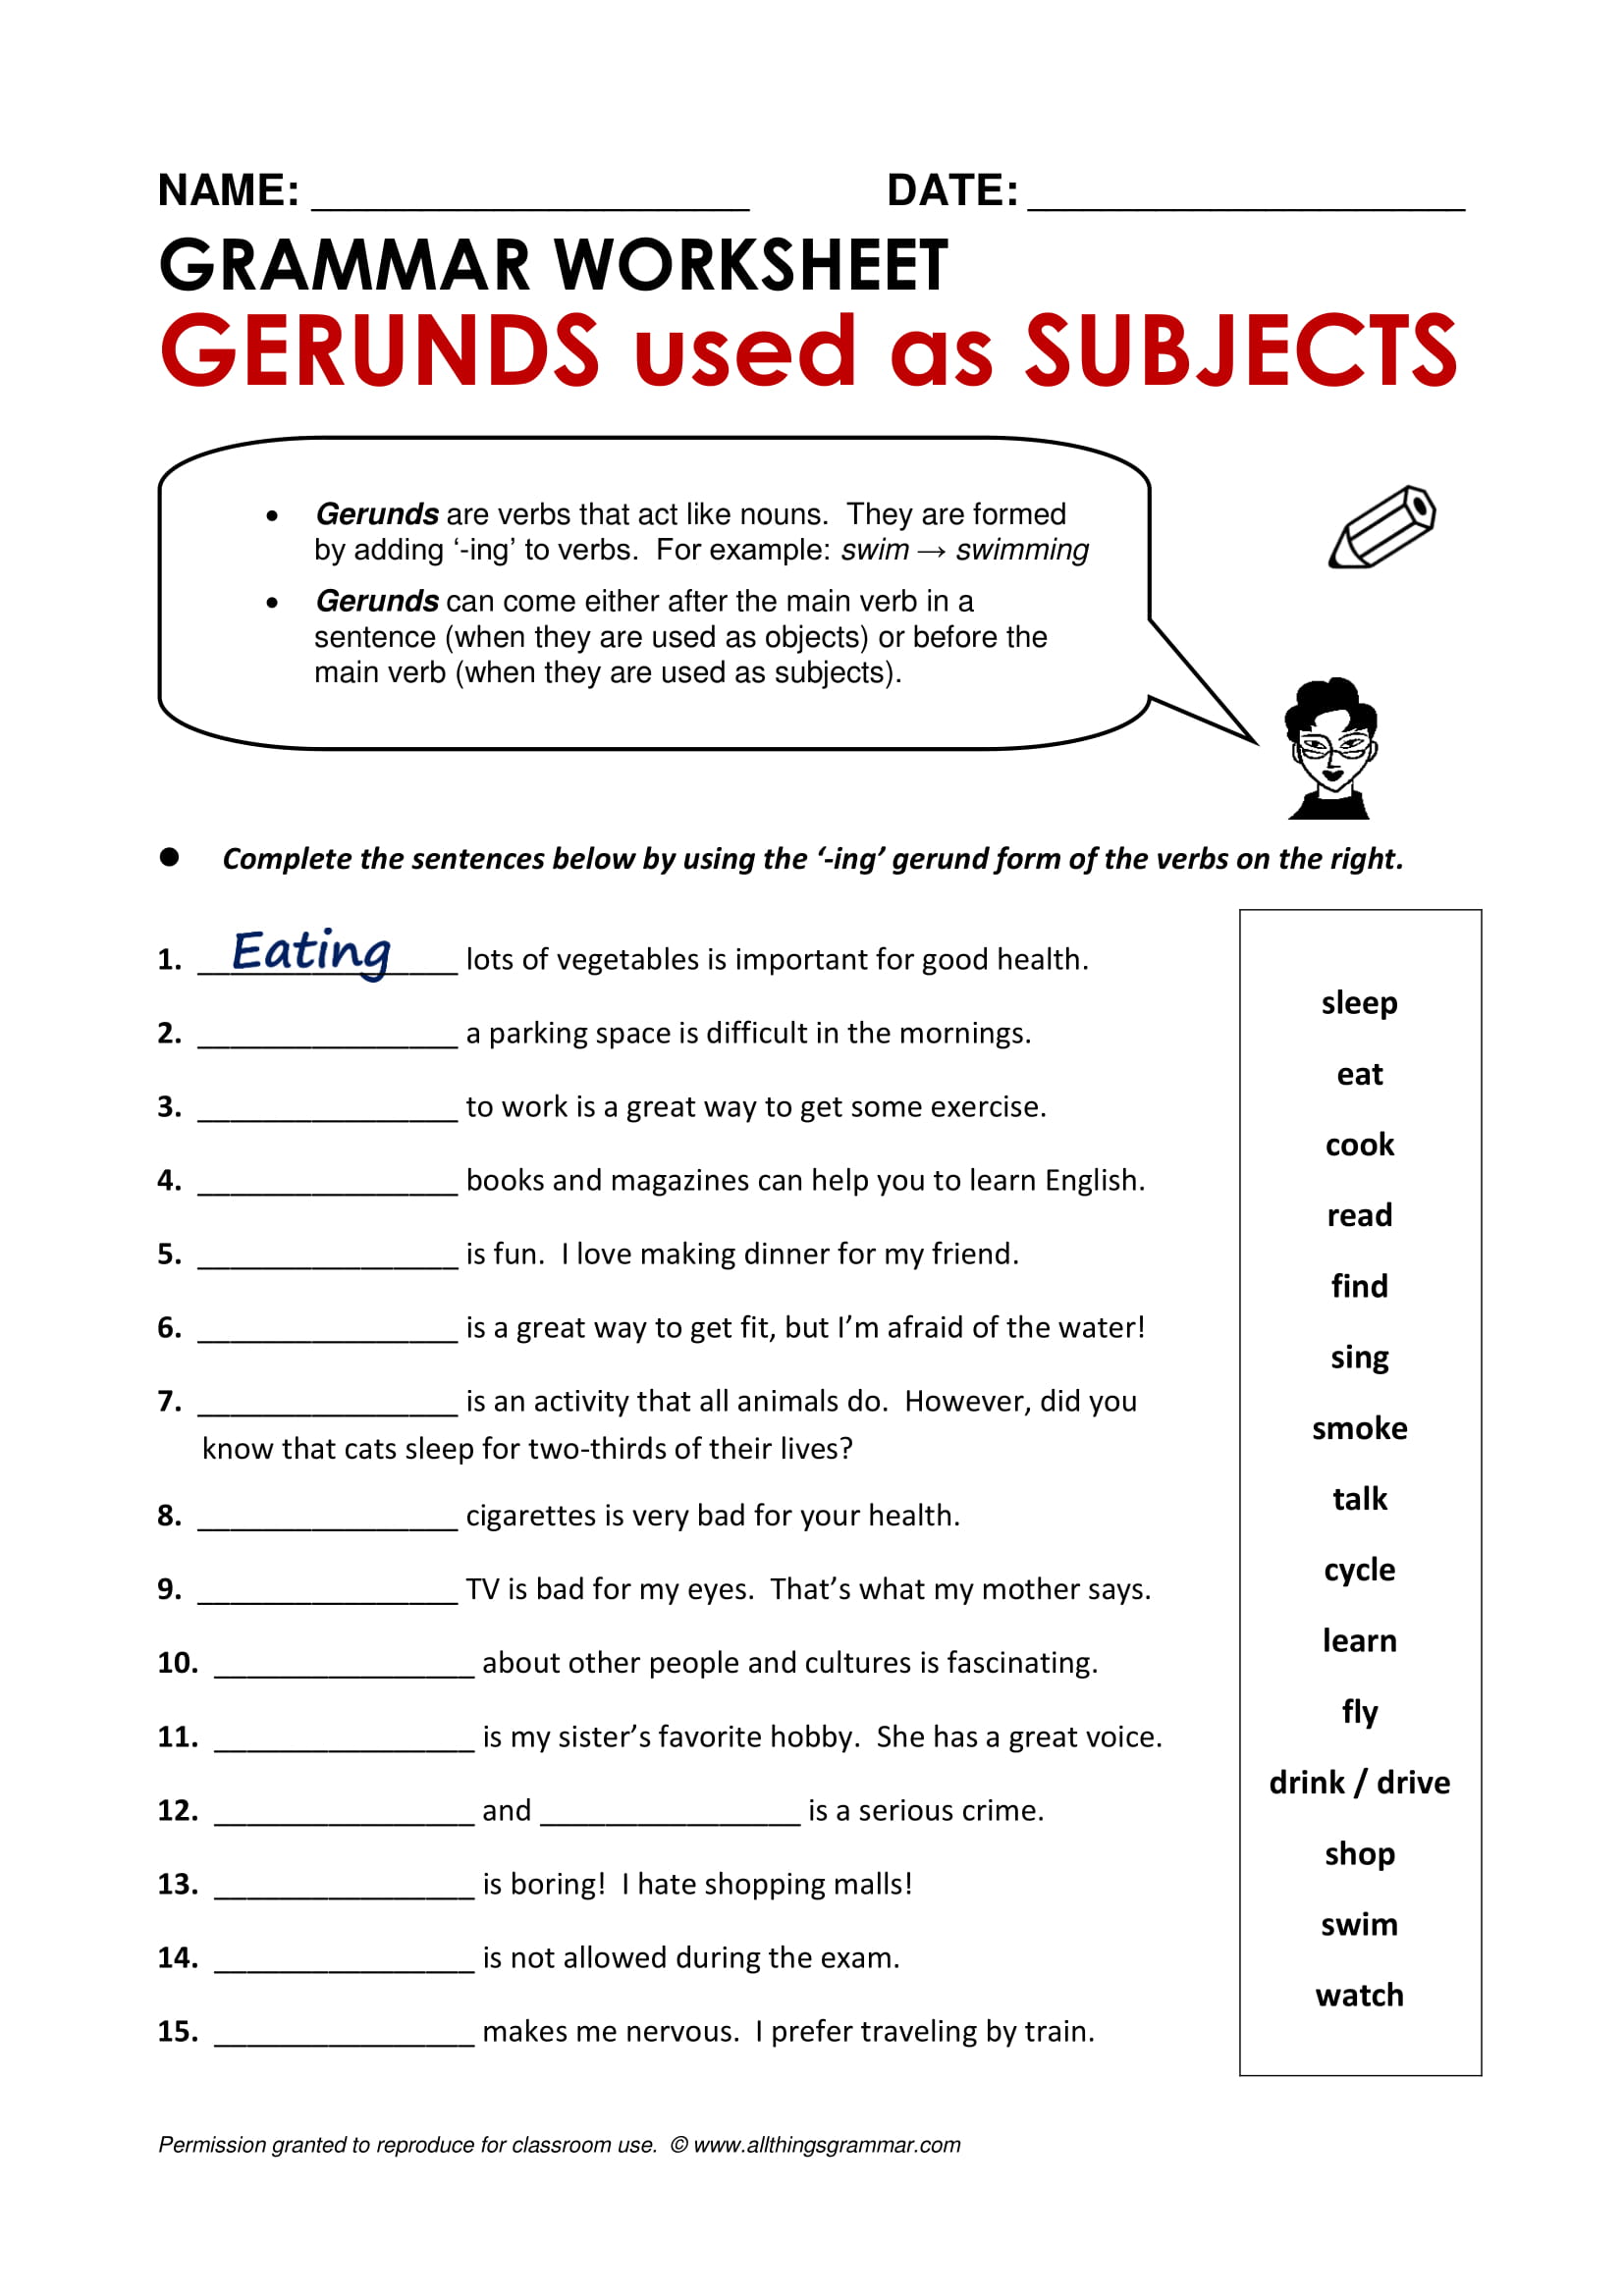 gerund-definition-and-examples-present-participle-vs-gerund-vs-gerundive-vs-infinitive